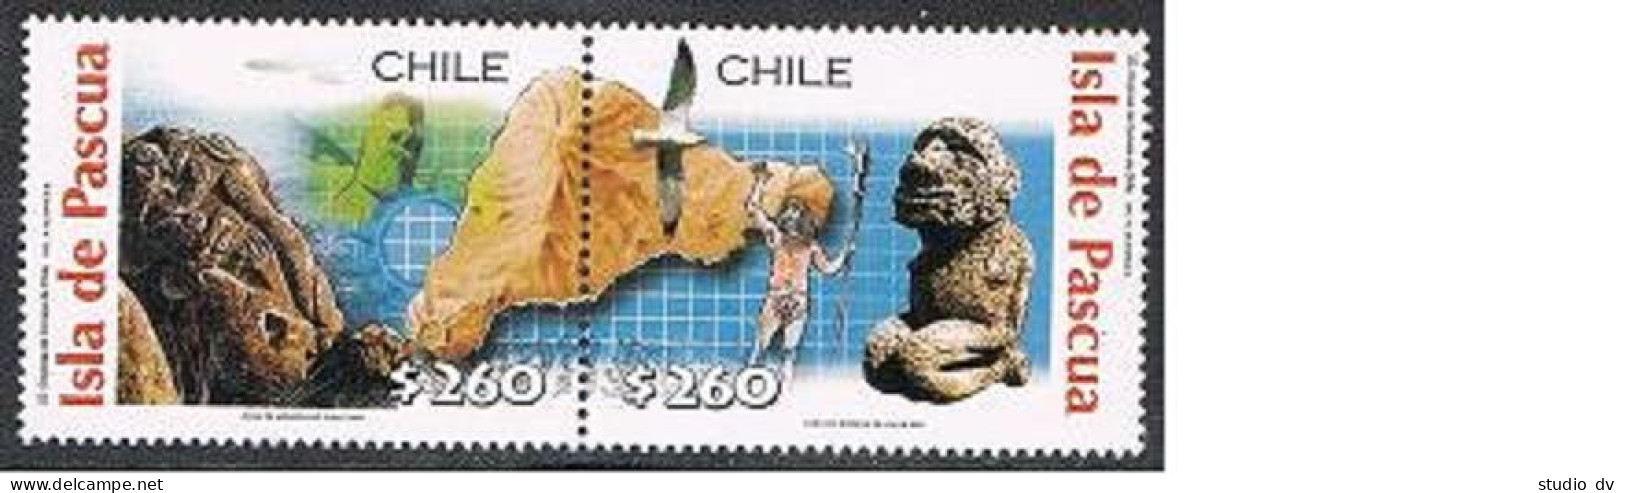 Chile 1361 Pair-label, MNH. Easter Island 2001. Bird, Artifact, Map.  - Cile